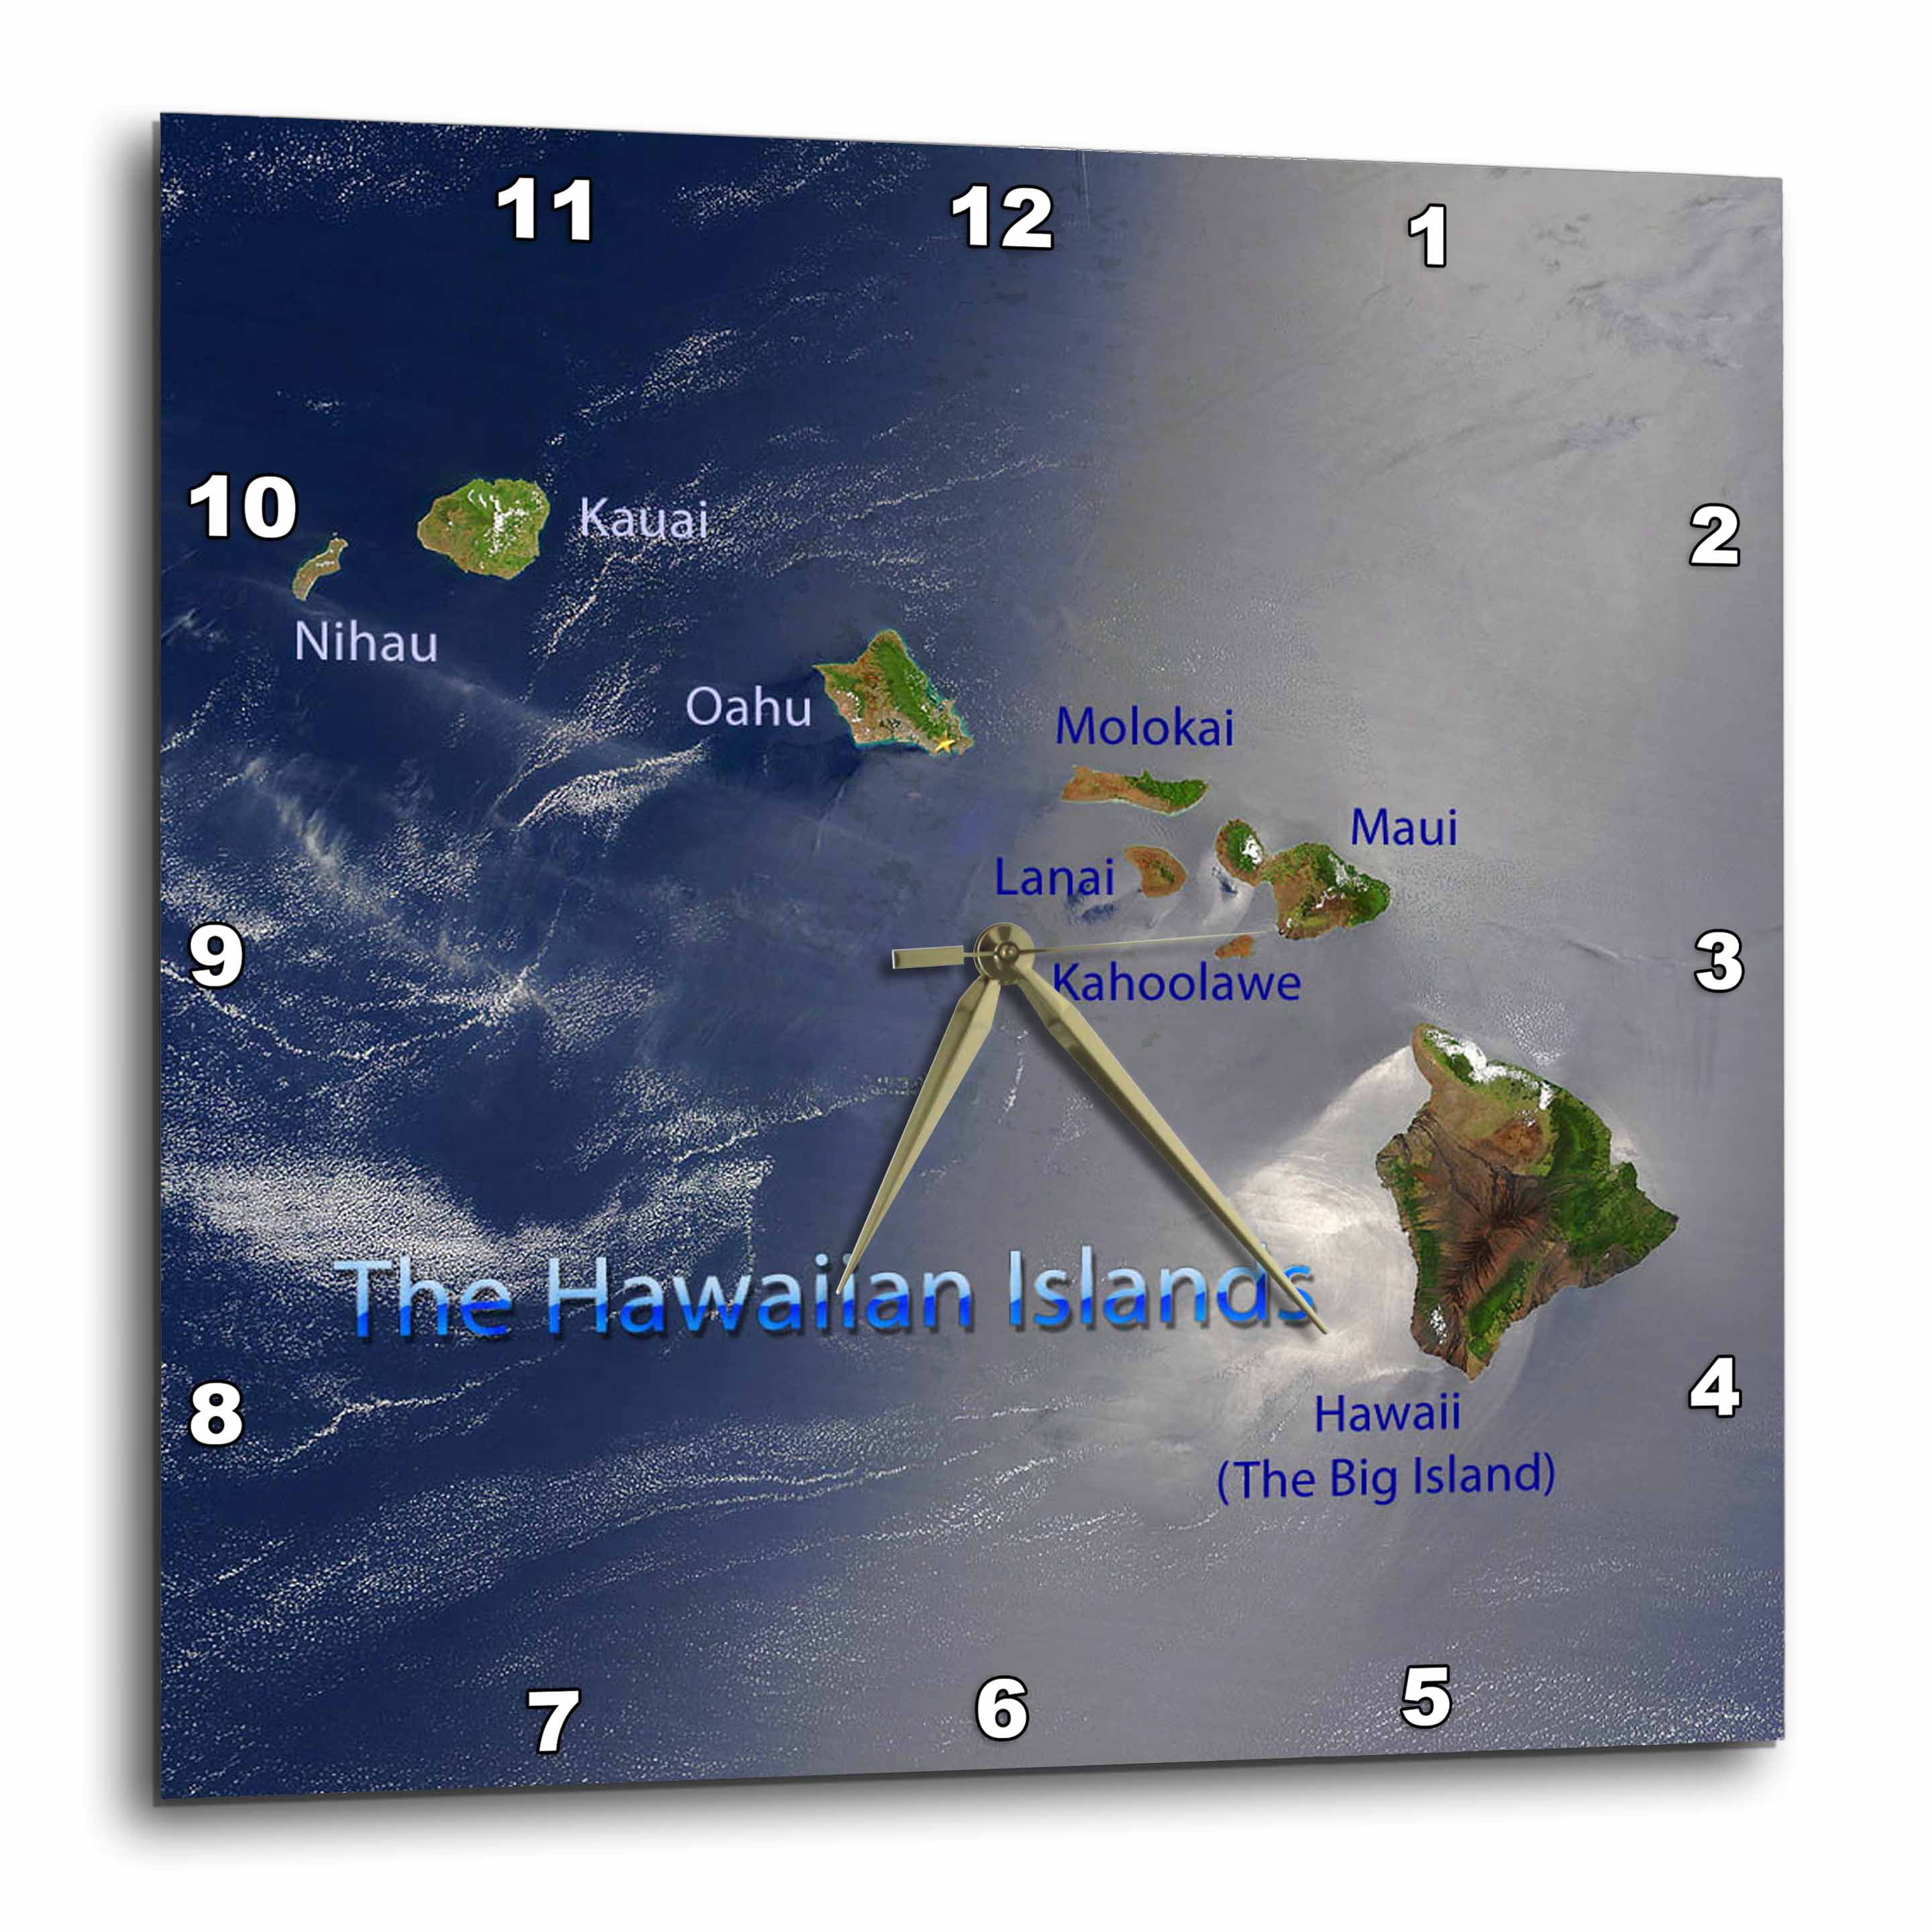 3dRose View of the Hawaiian Islands - Wall Clock, 15 by 15-inch 